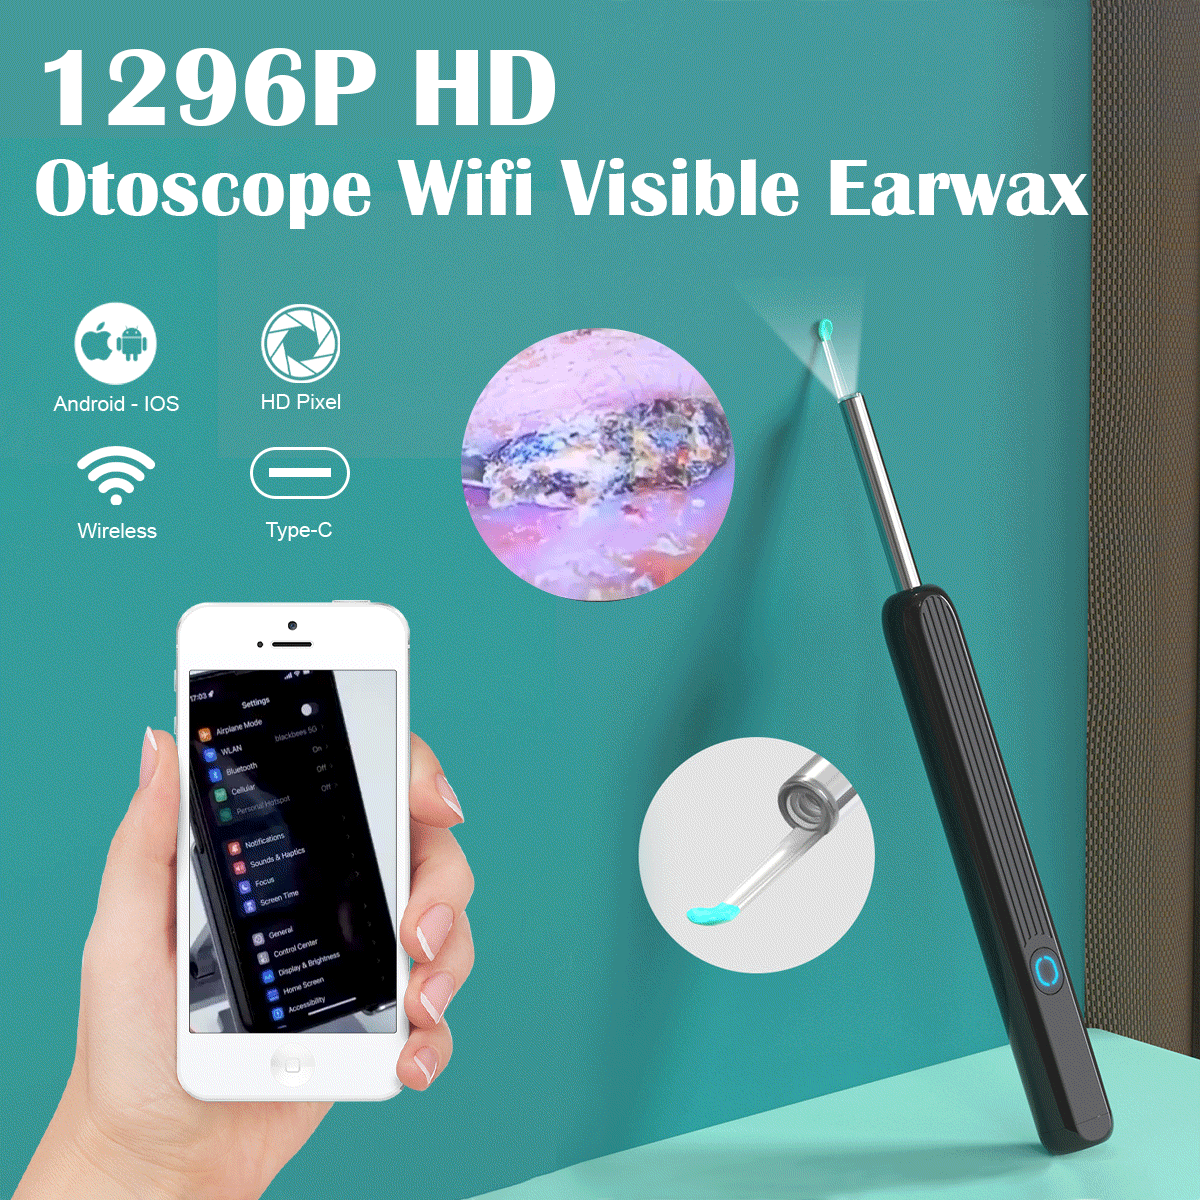 1296P HD Otoscope Wifi Visible Earwax